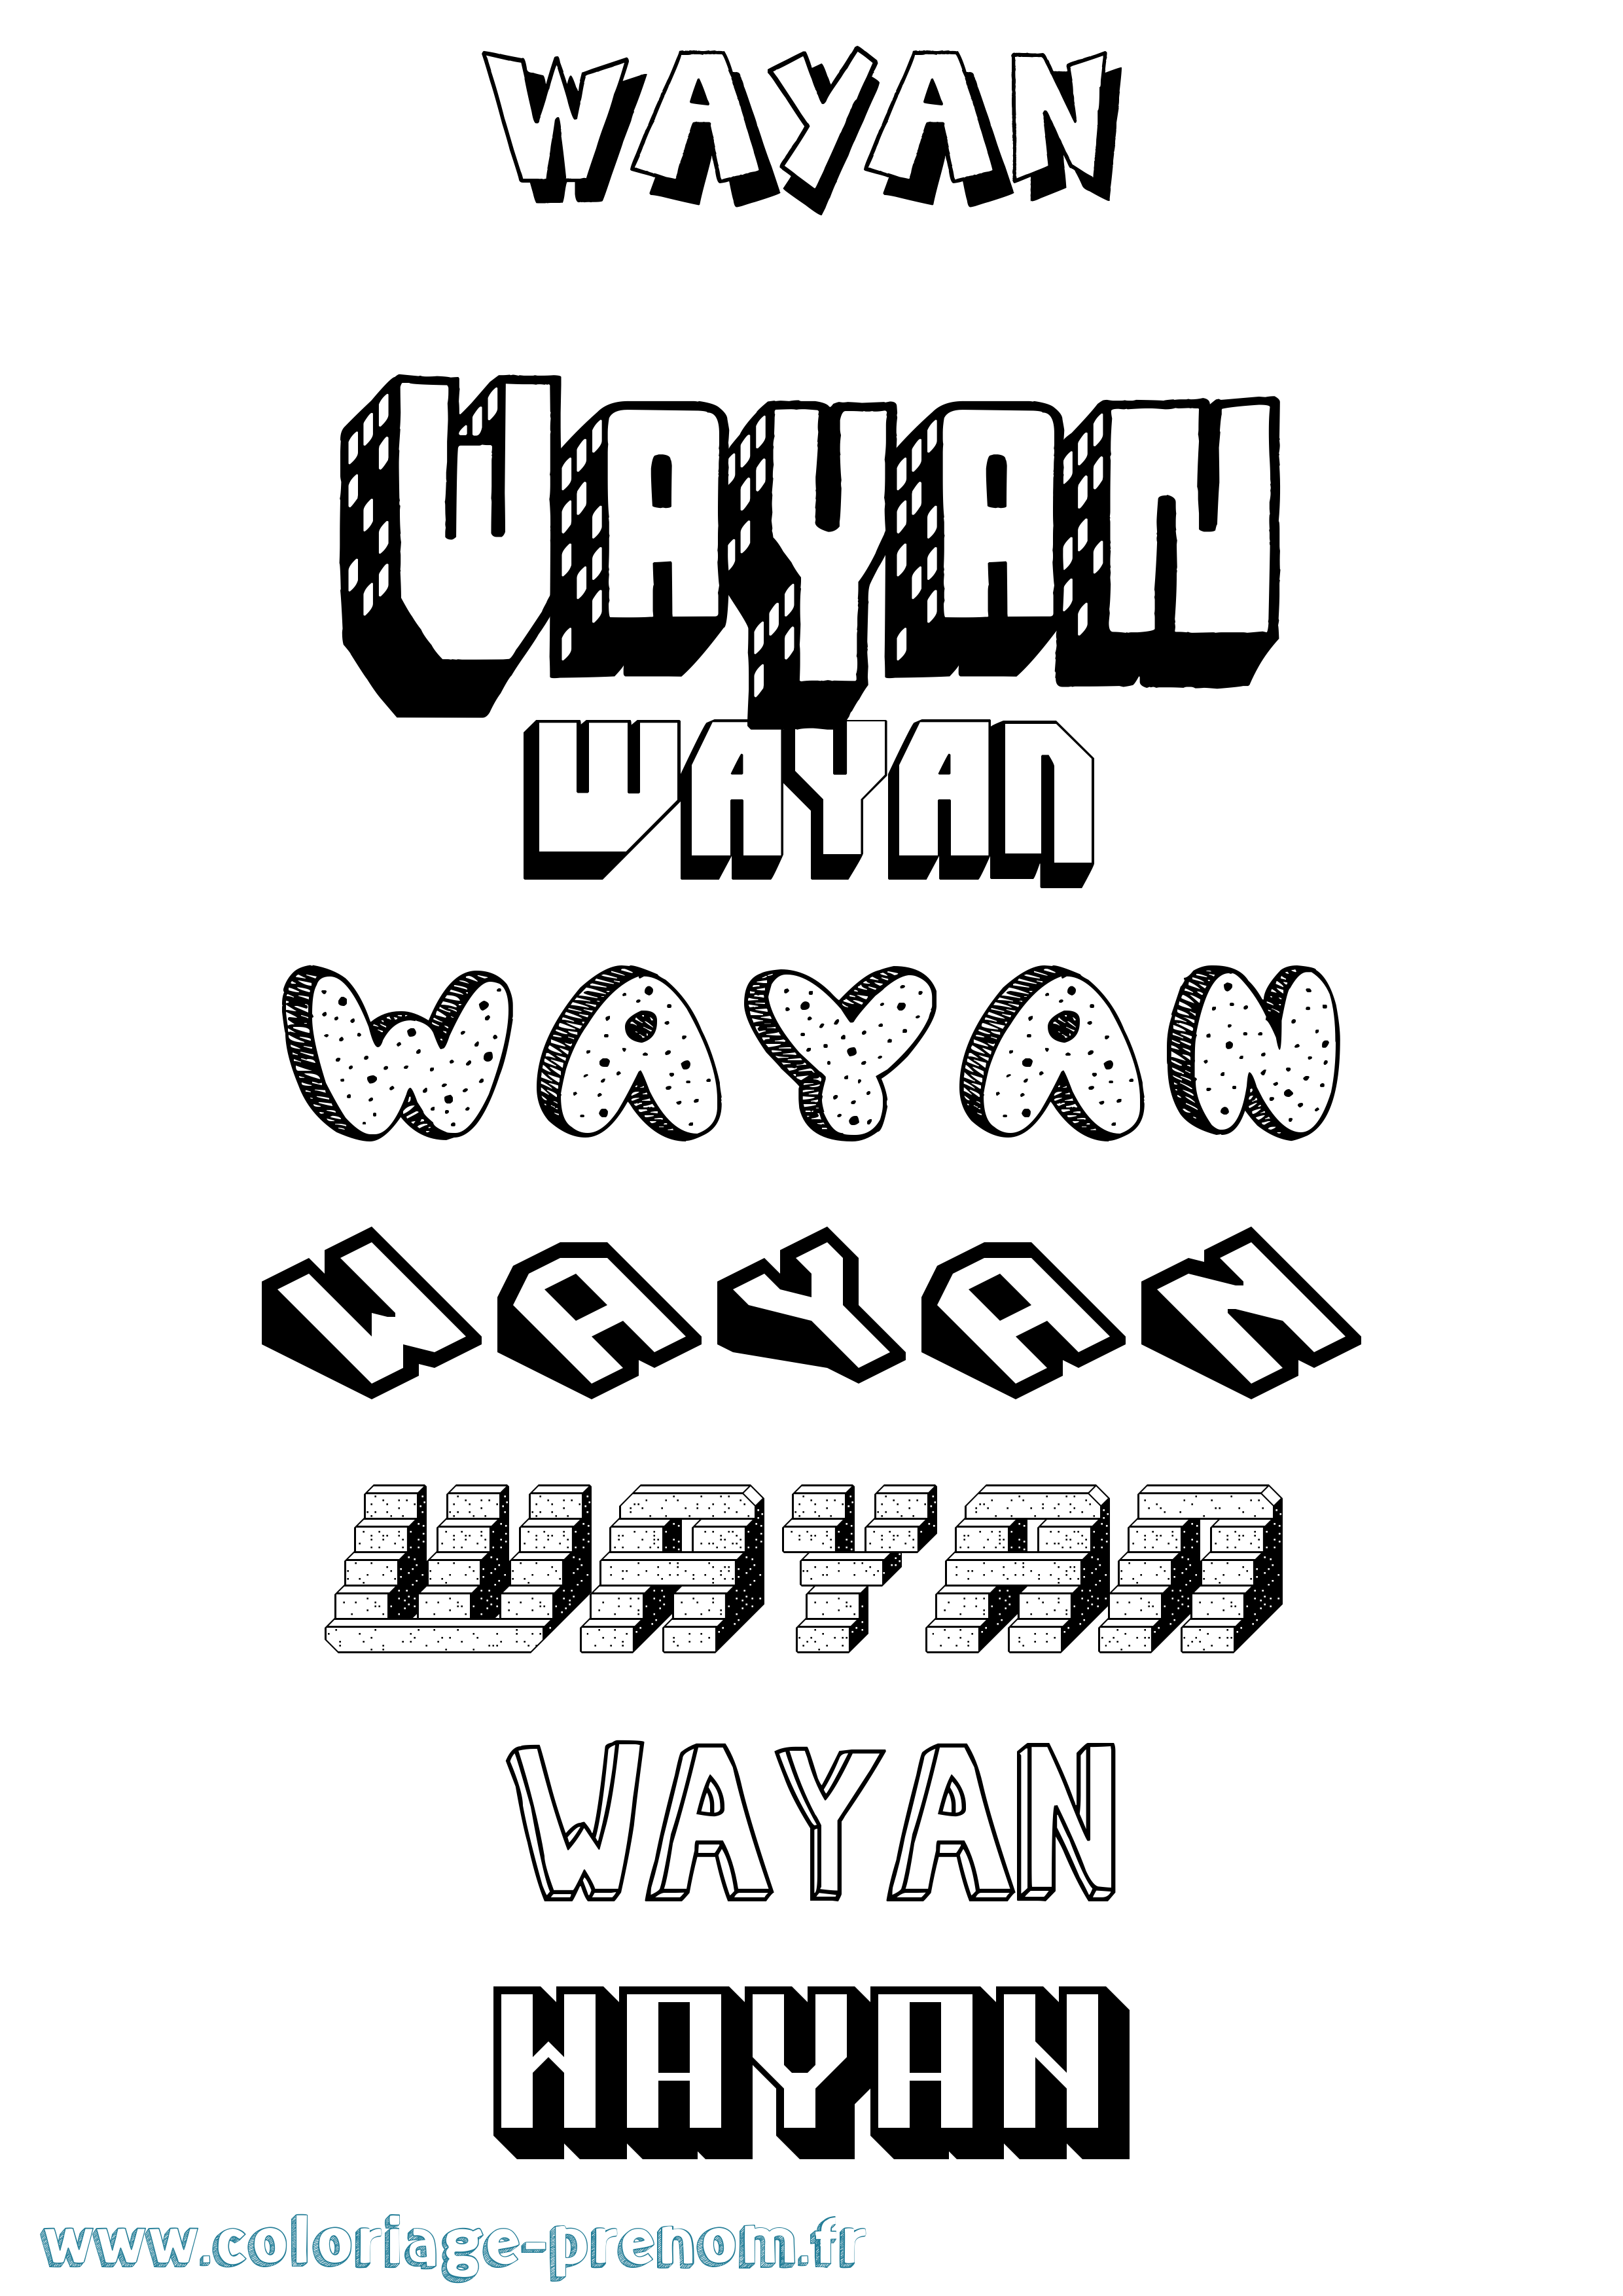 Coloriage prénom Wayan Effet 3D